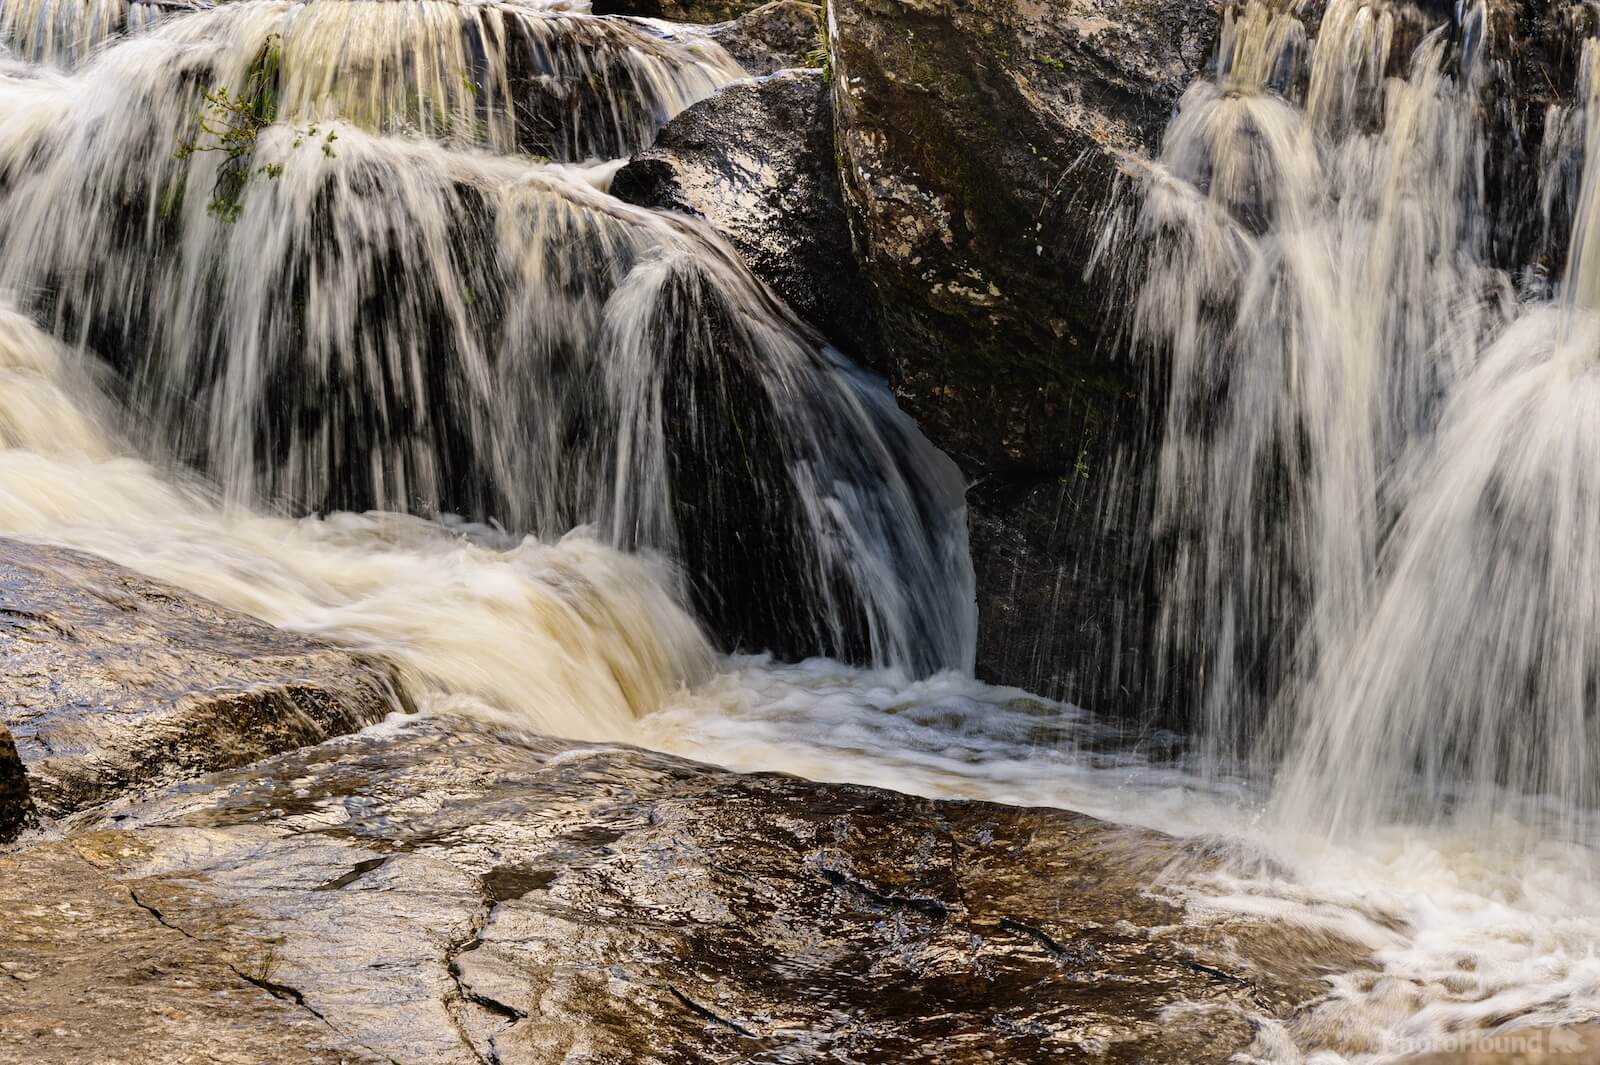 Image of Falls of Dochart, Killin, Scotland by Alan Crozier